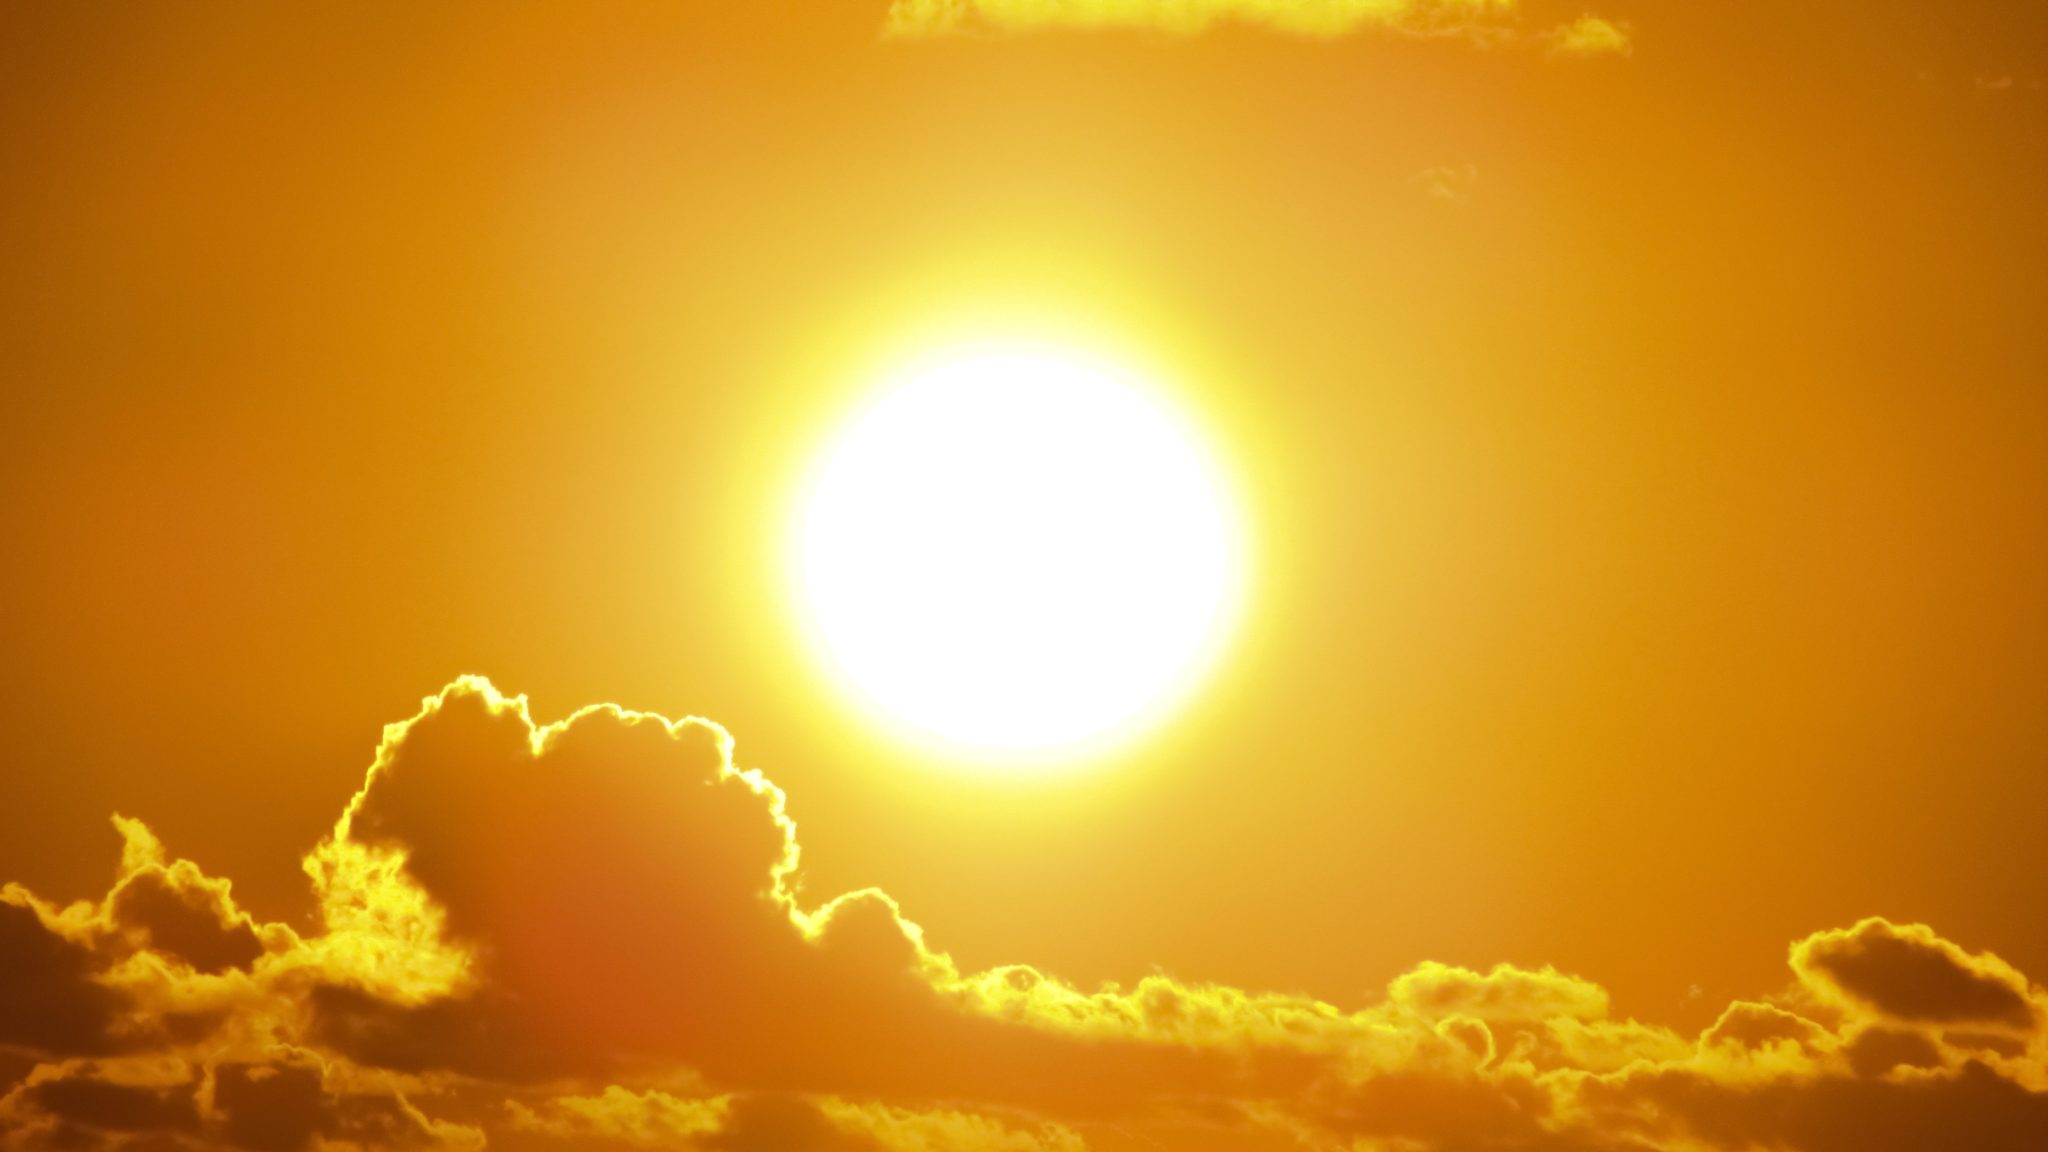 Bank Holiday Sunshine Breaks UK Solar Record